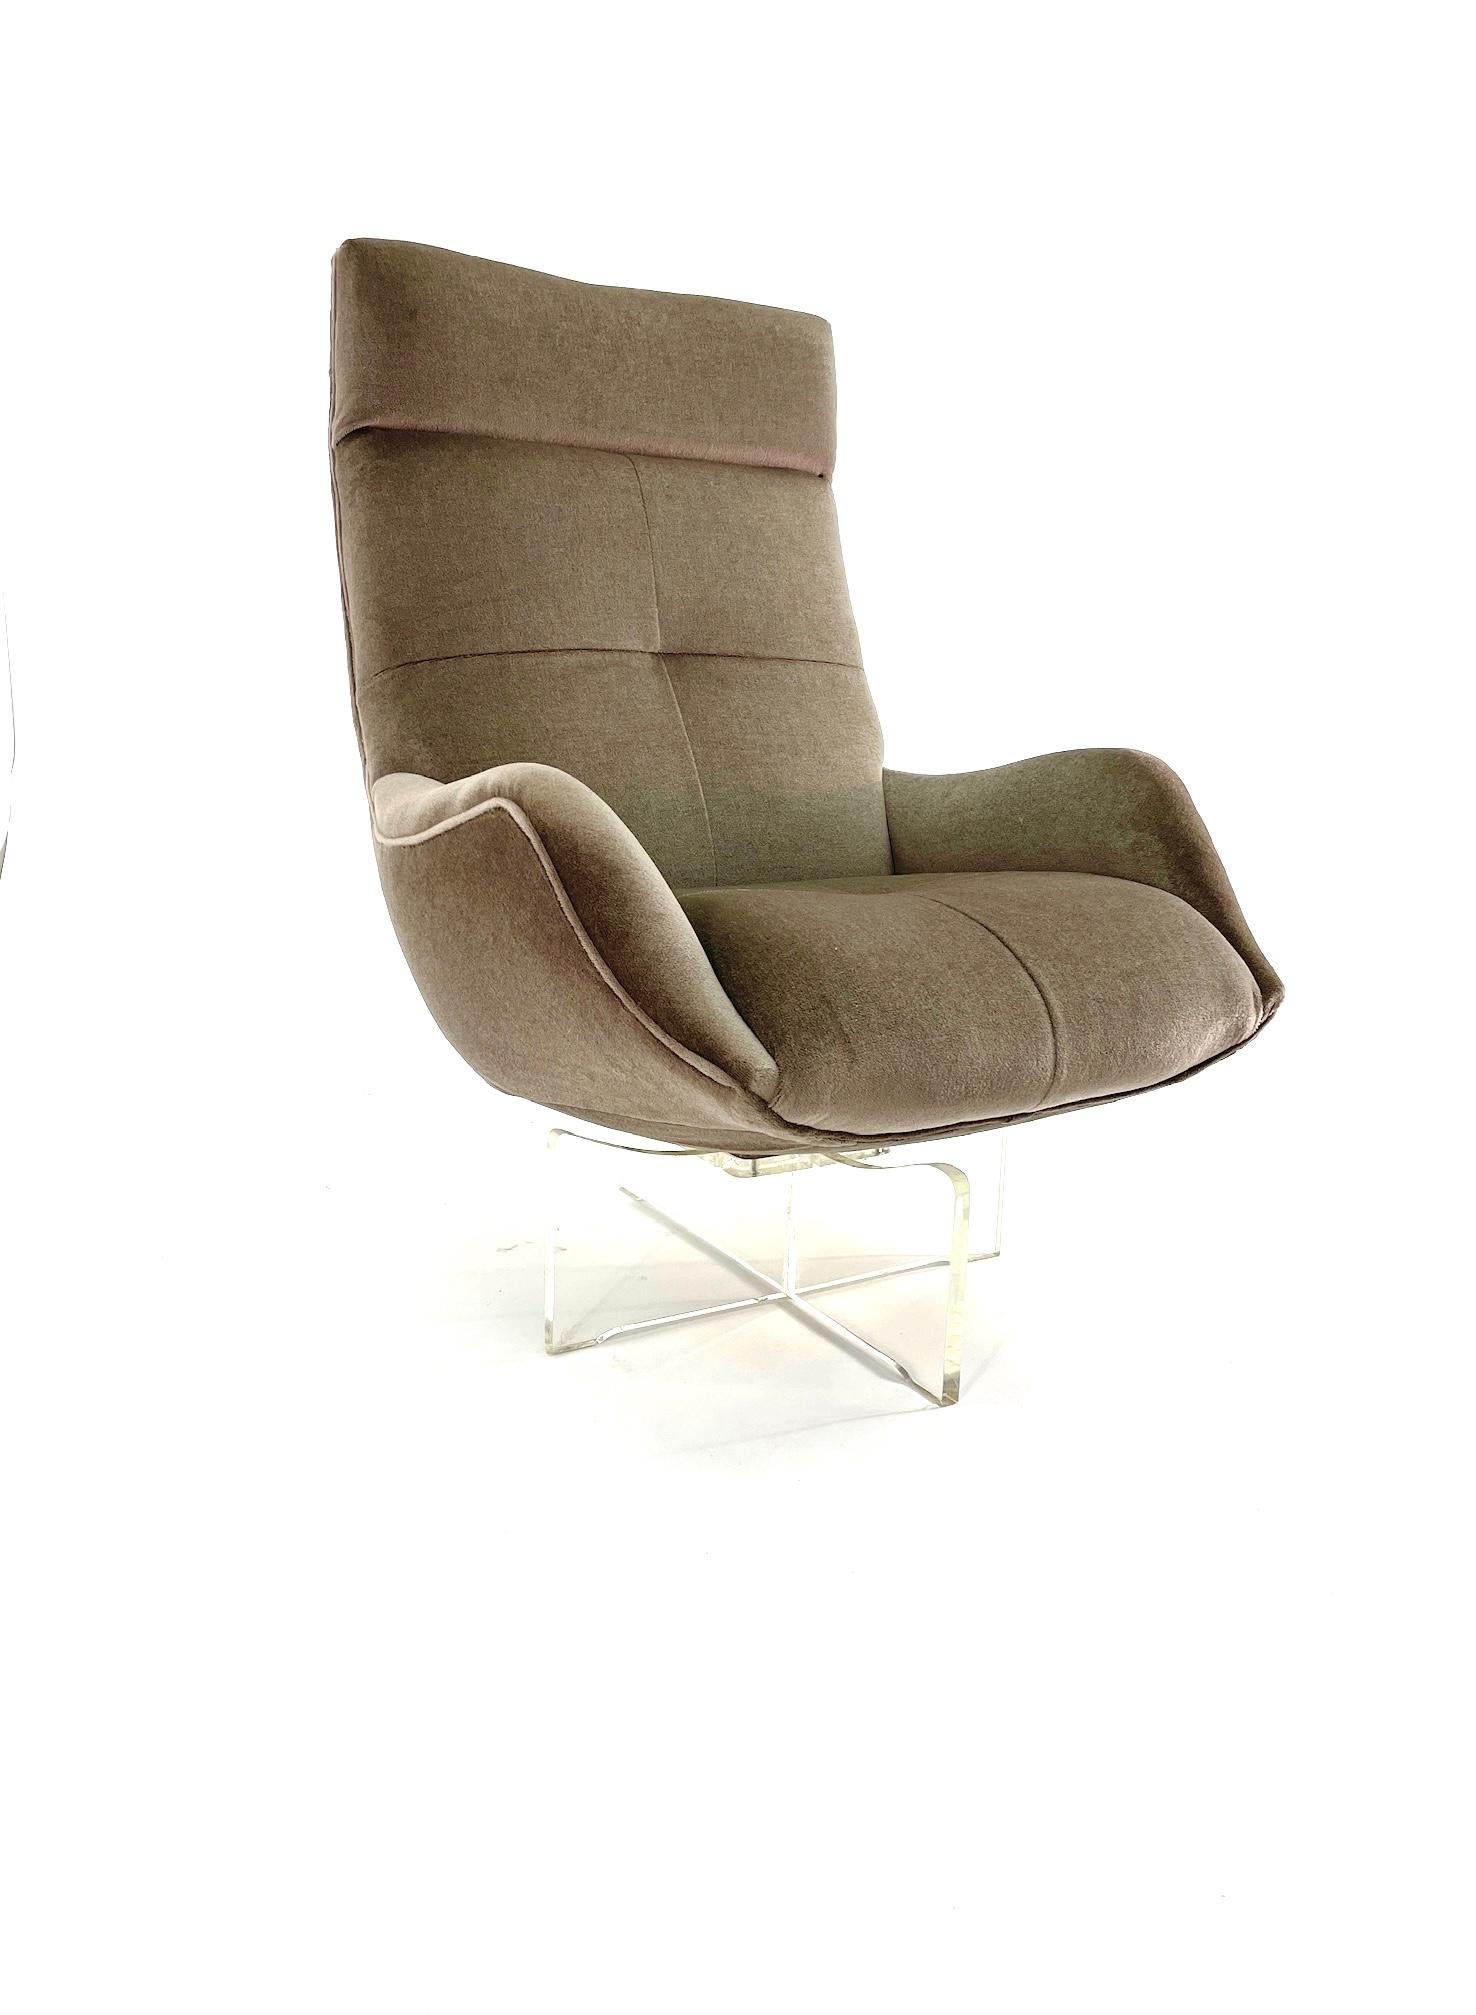 Vladimir Kagan Erica High Back Lounge Chair Model Circa 1967